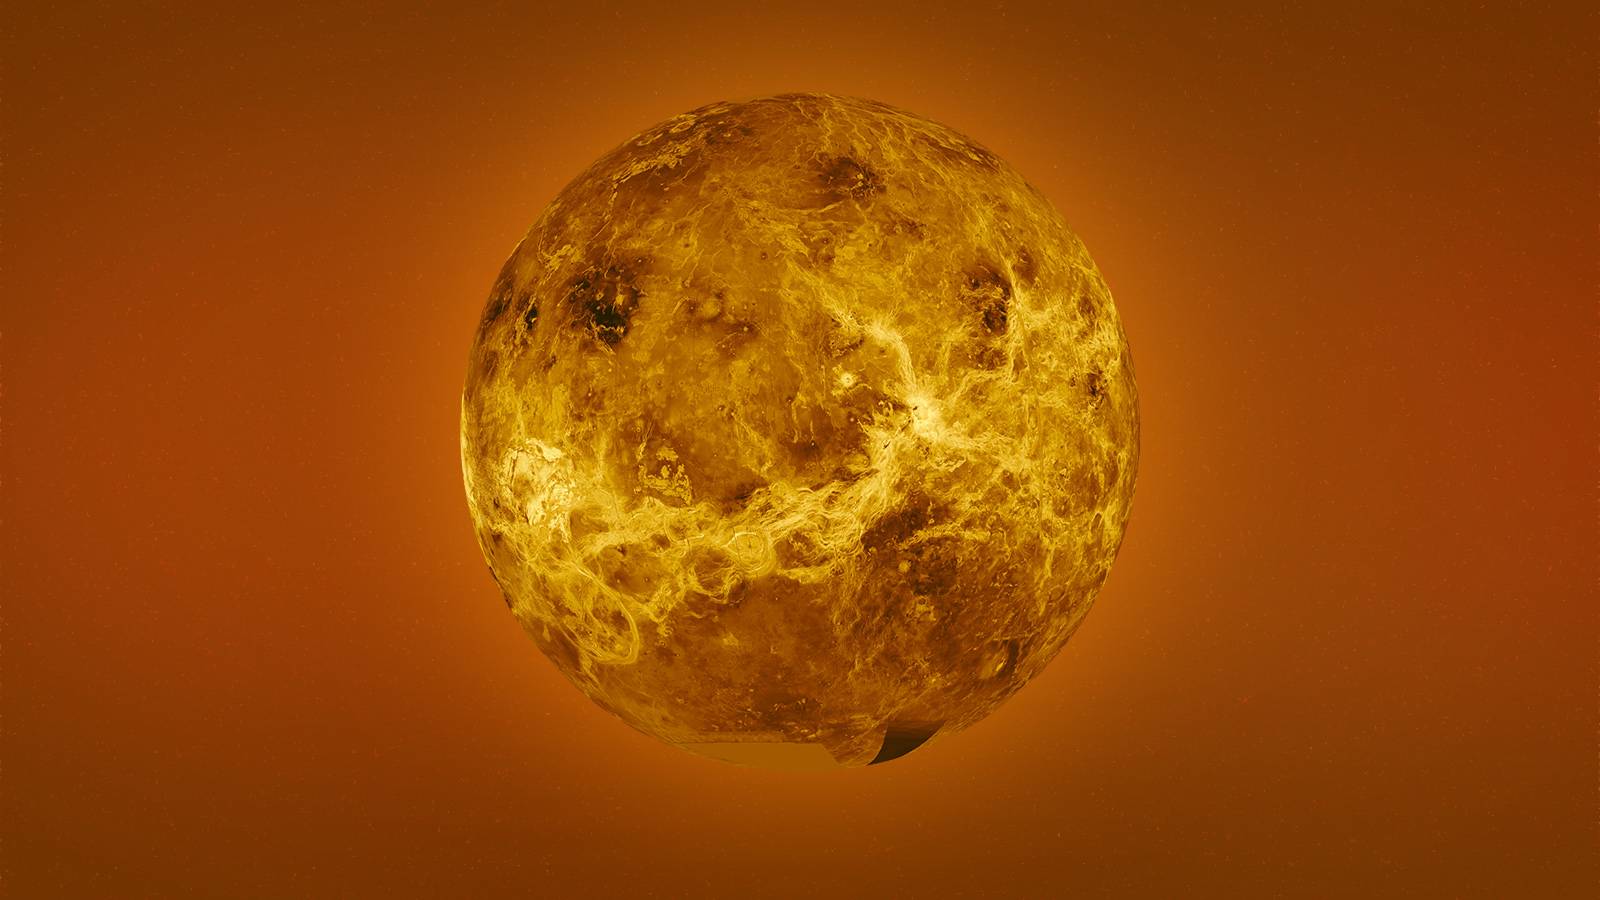 Planet Venus show